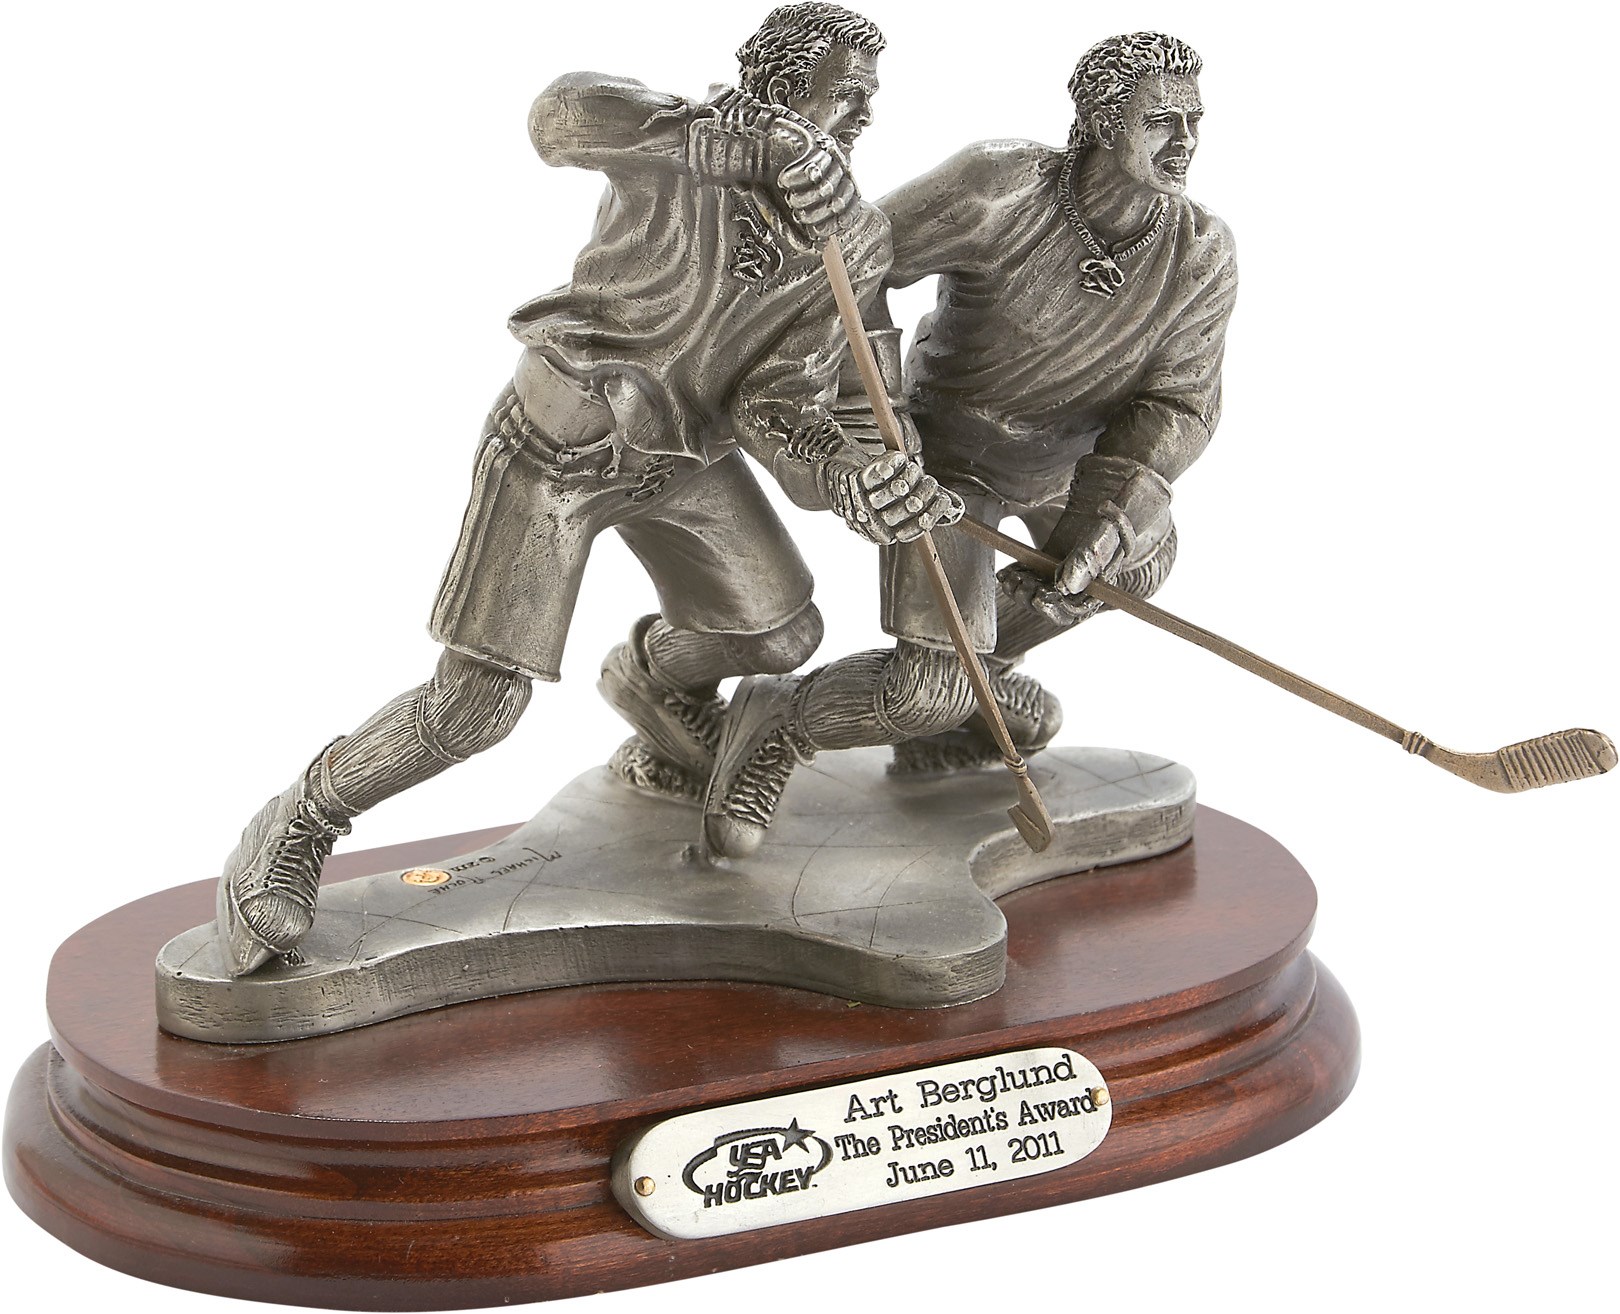 - 2011 USA Hockey President's Award Presented to Art Berglund